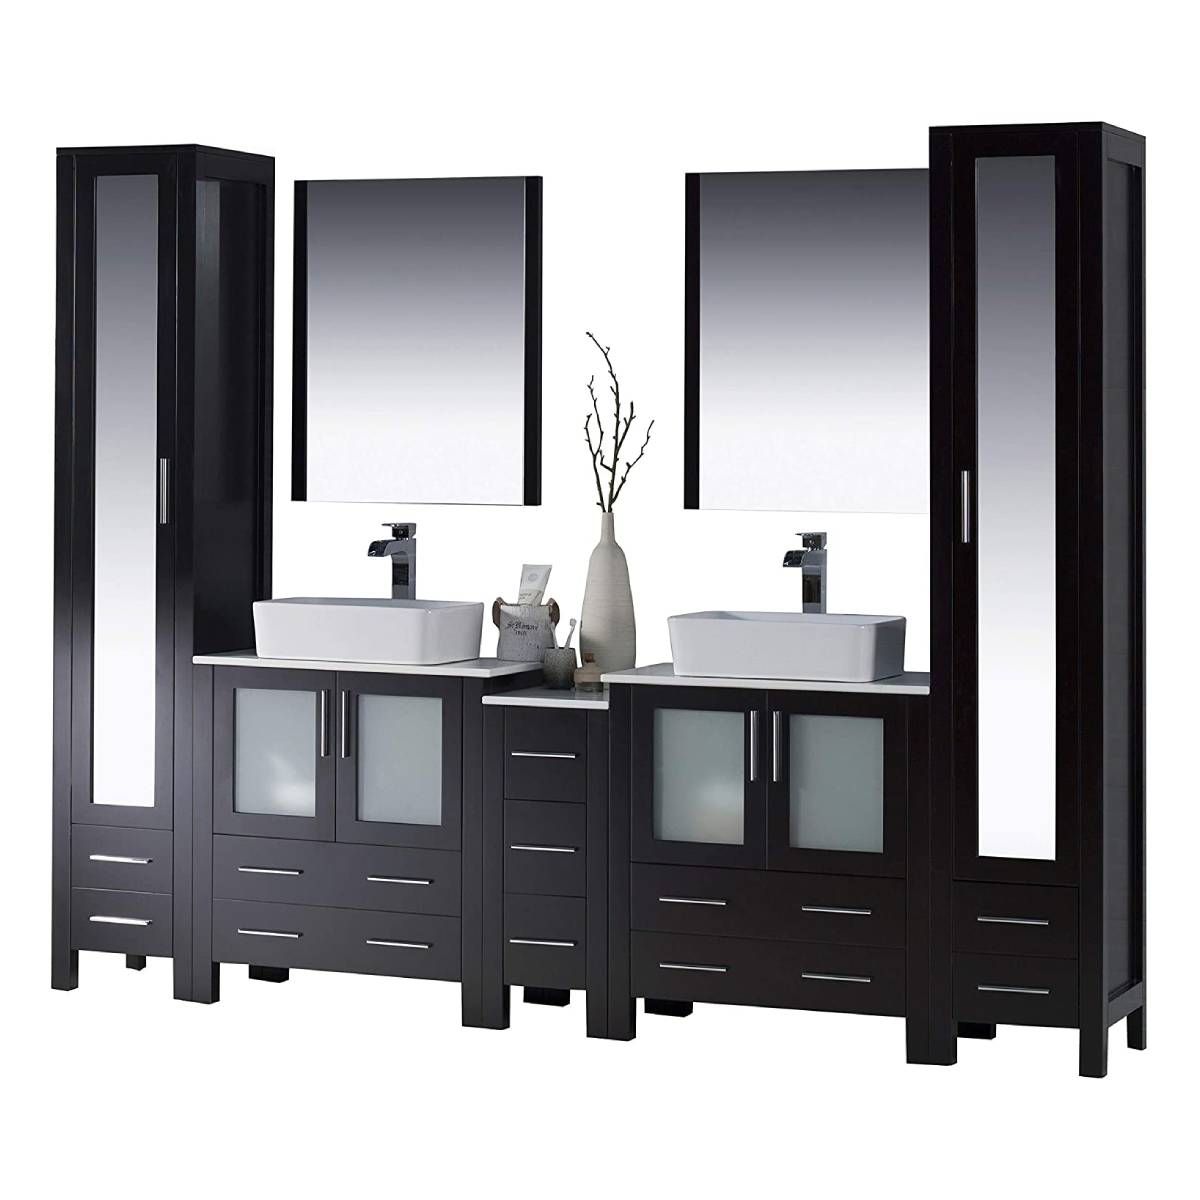 Sydney - 102 Inch Vanity with Ceramic Double Vessel Sinks & Mirrors - Espresso - Molaix842708125780Sydney001 102 02 V M